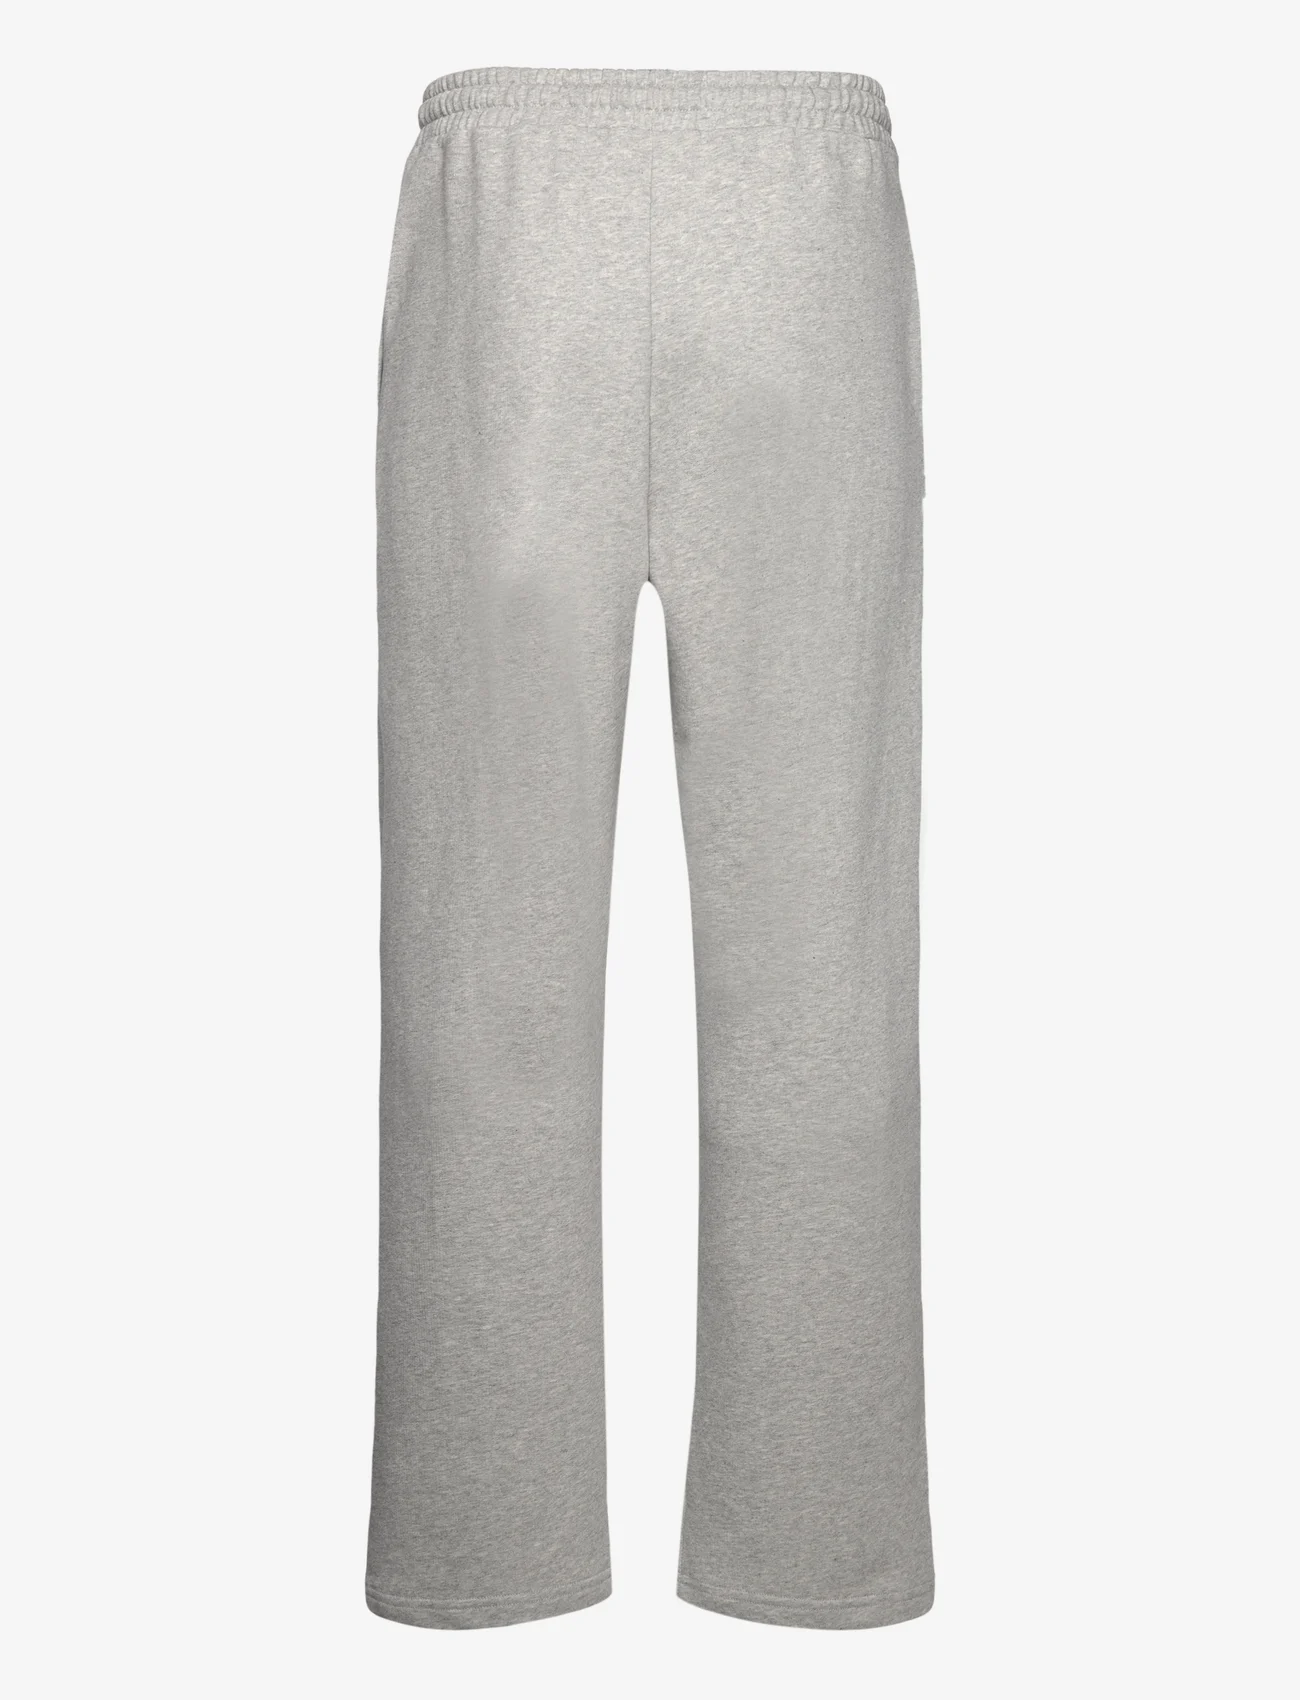 BLS Hafnia - Essential Loose Sweatpants - nordic style - grey - 1